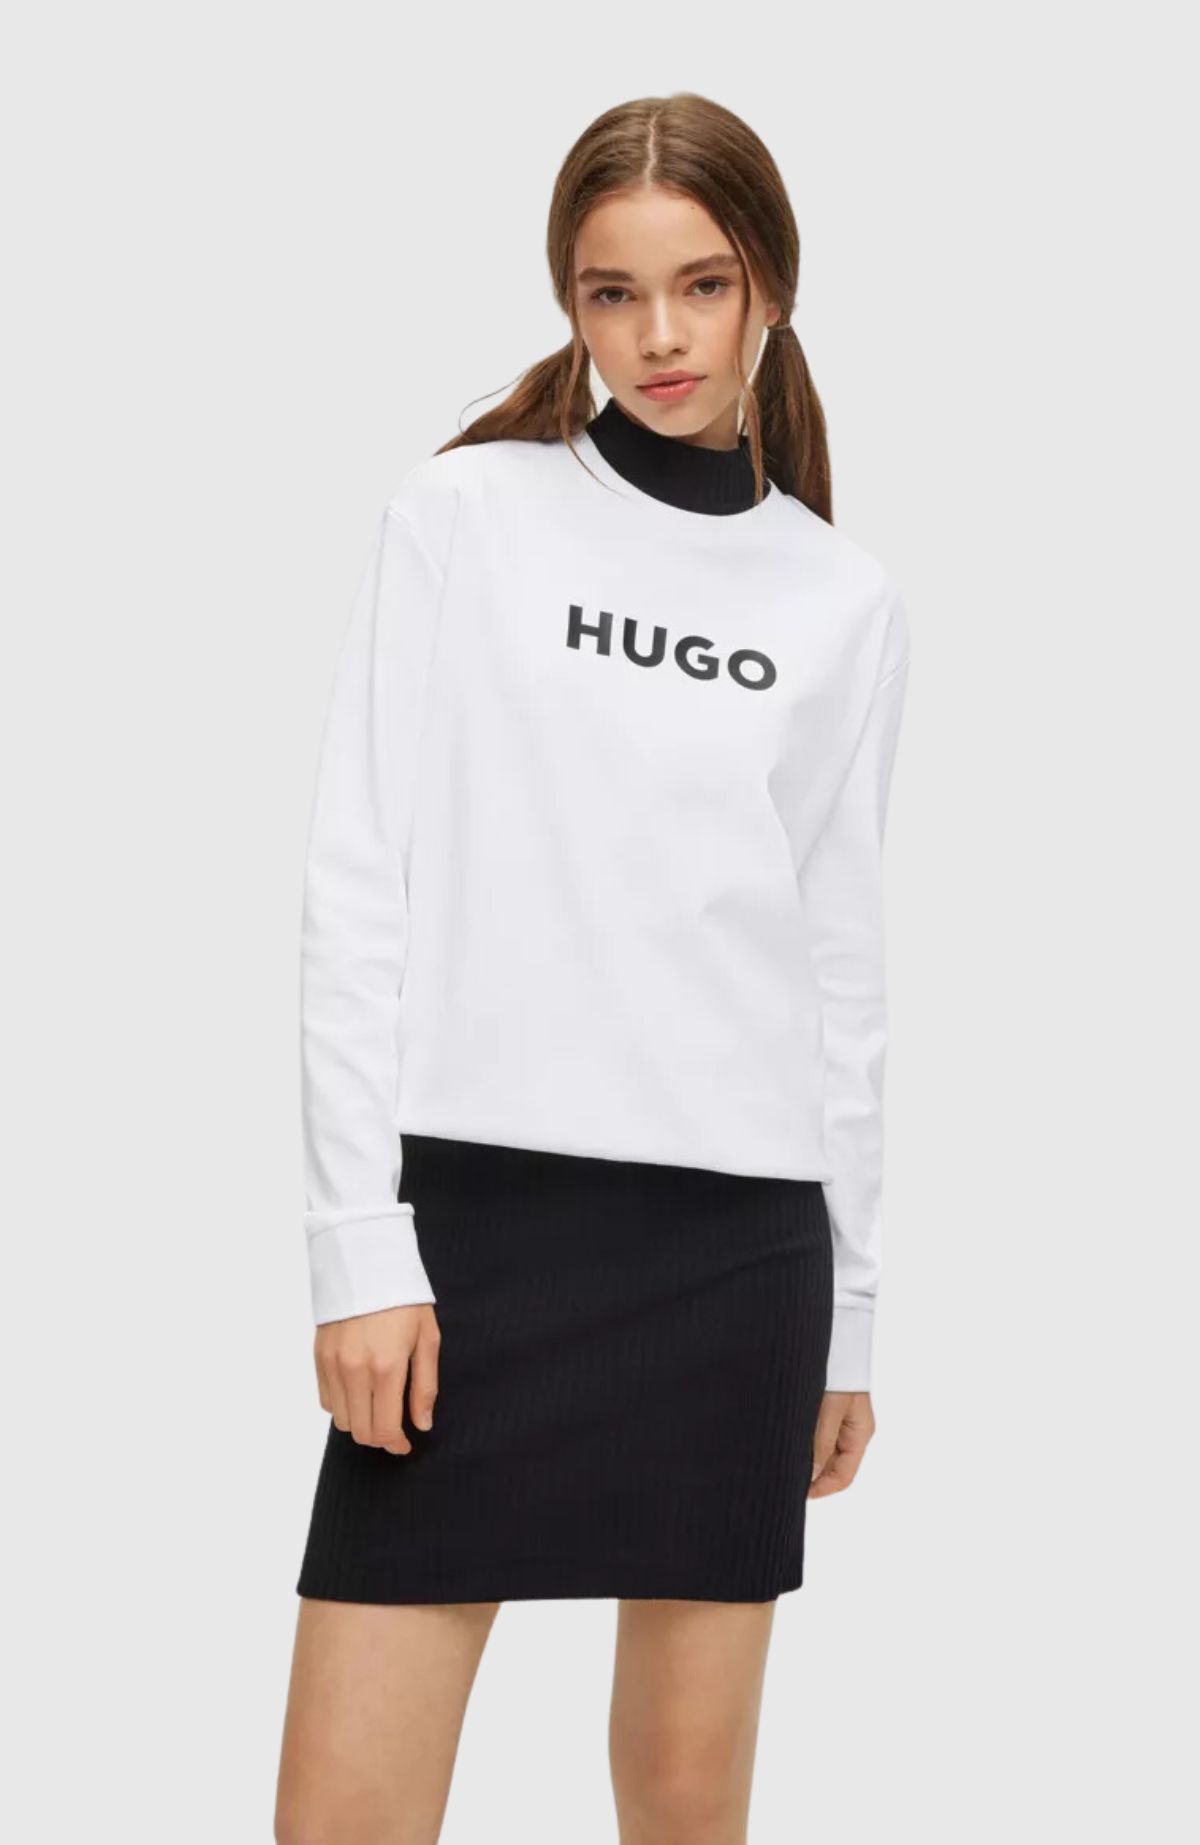 The HUGO Sweater - Maxx Group